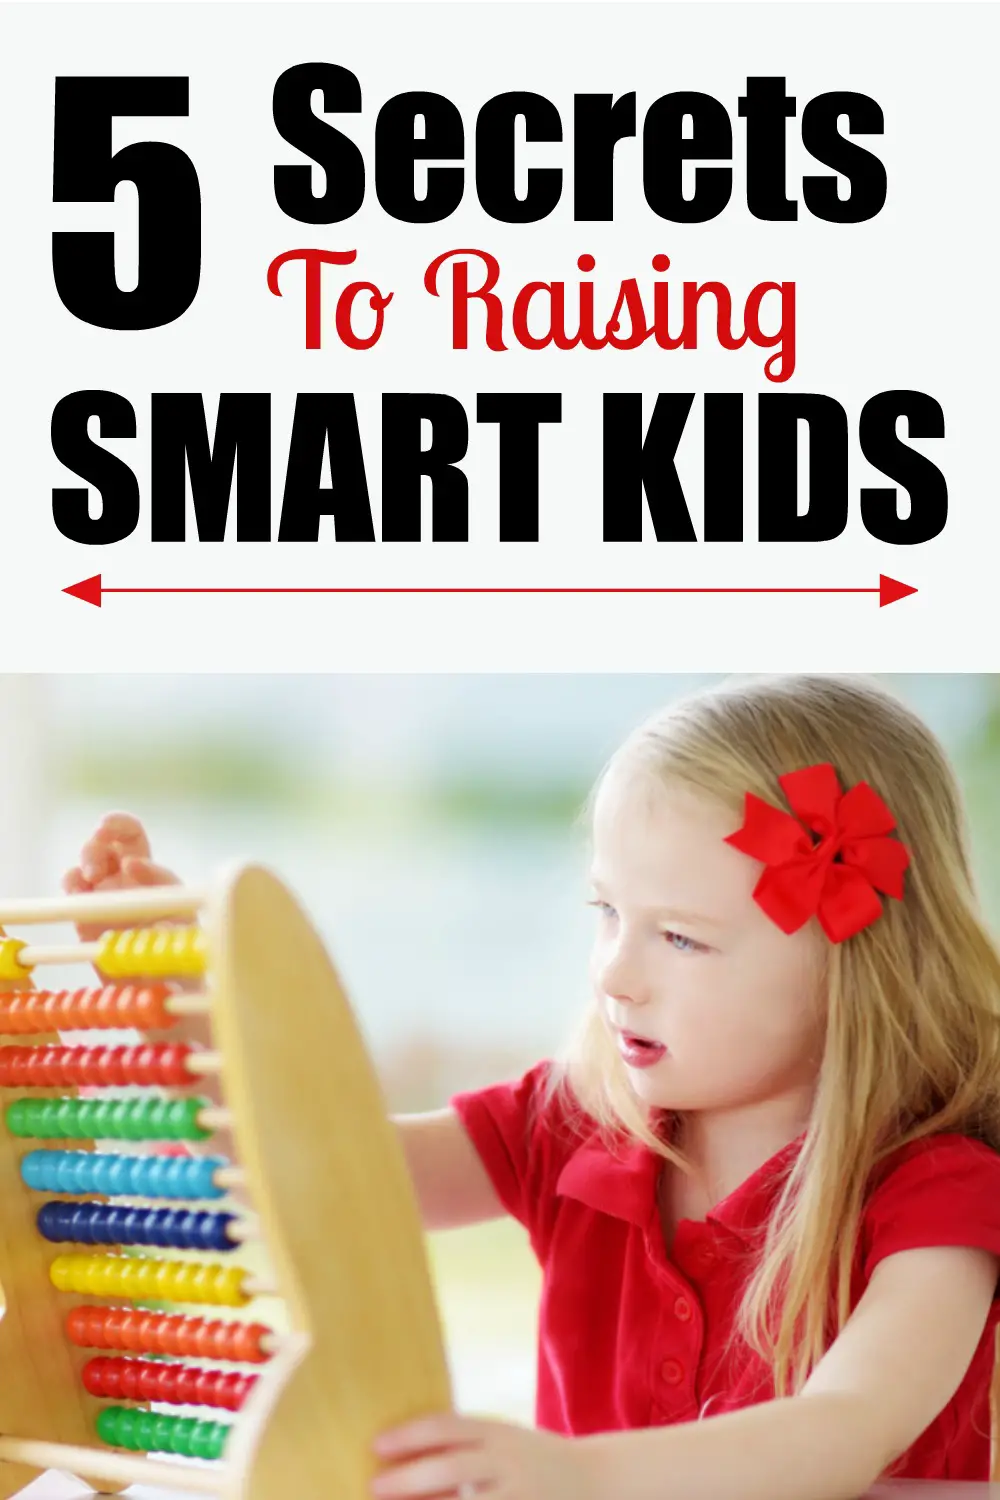 The secret to raising smart kids | Smart Kids